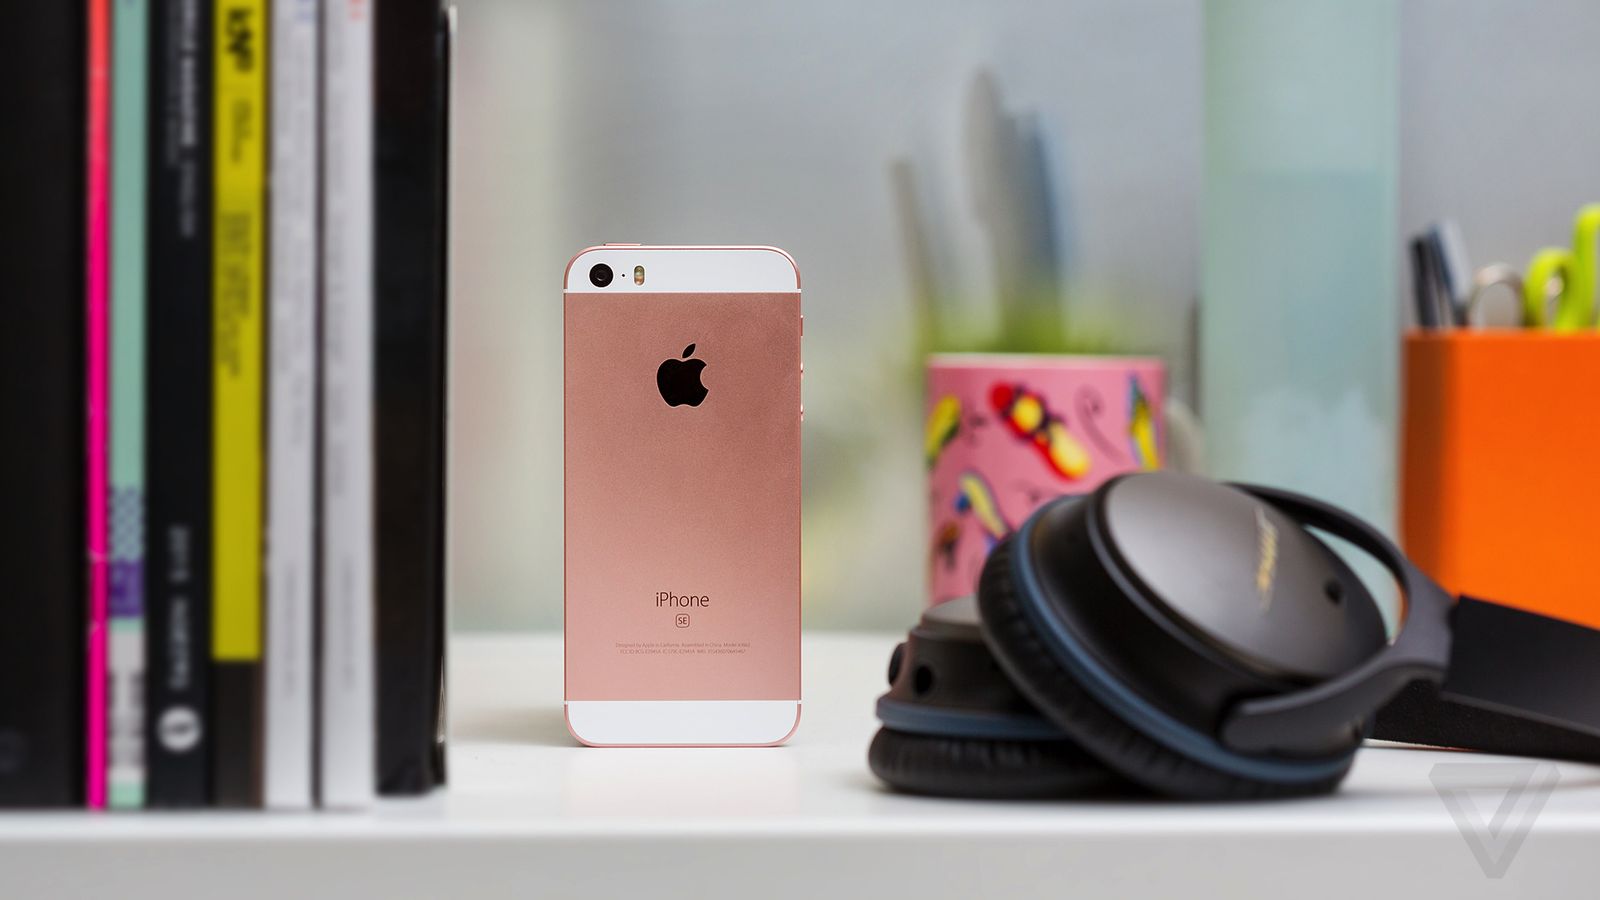 iphone se review jbareham verge 15.0.0 | apple | [บทความแปล] รีวิว iPhone SE สมาร์ทโฟนที่เลือกใช้เทคโนโลยีสมัยใหม่ในดีไซน์วันวาน